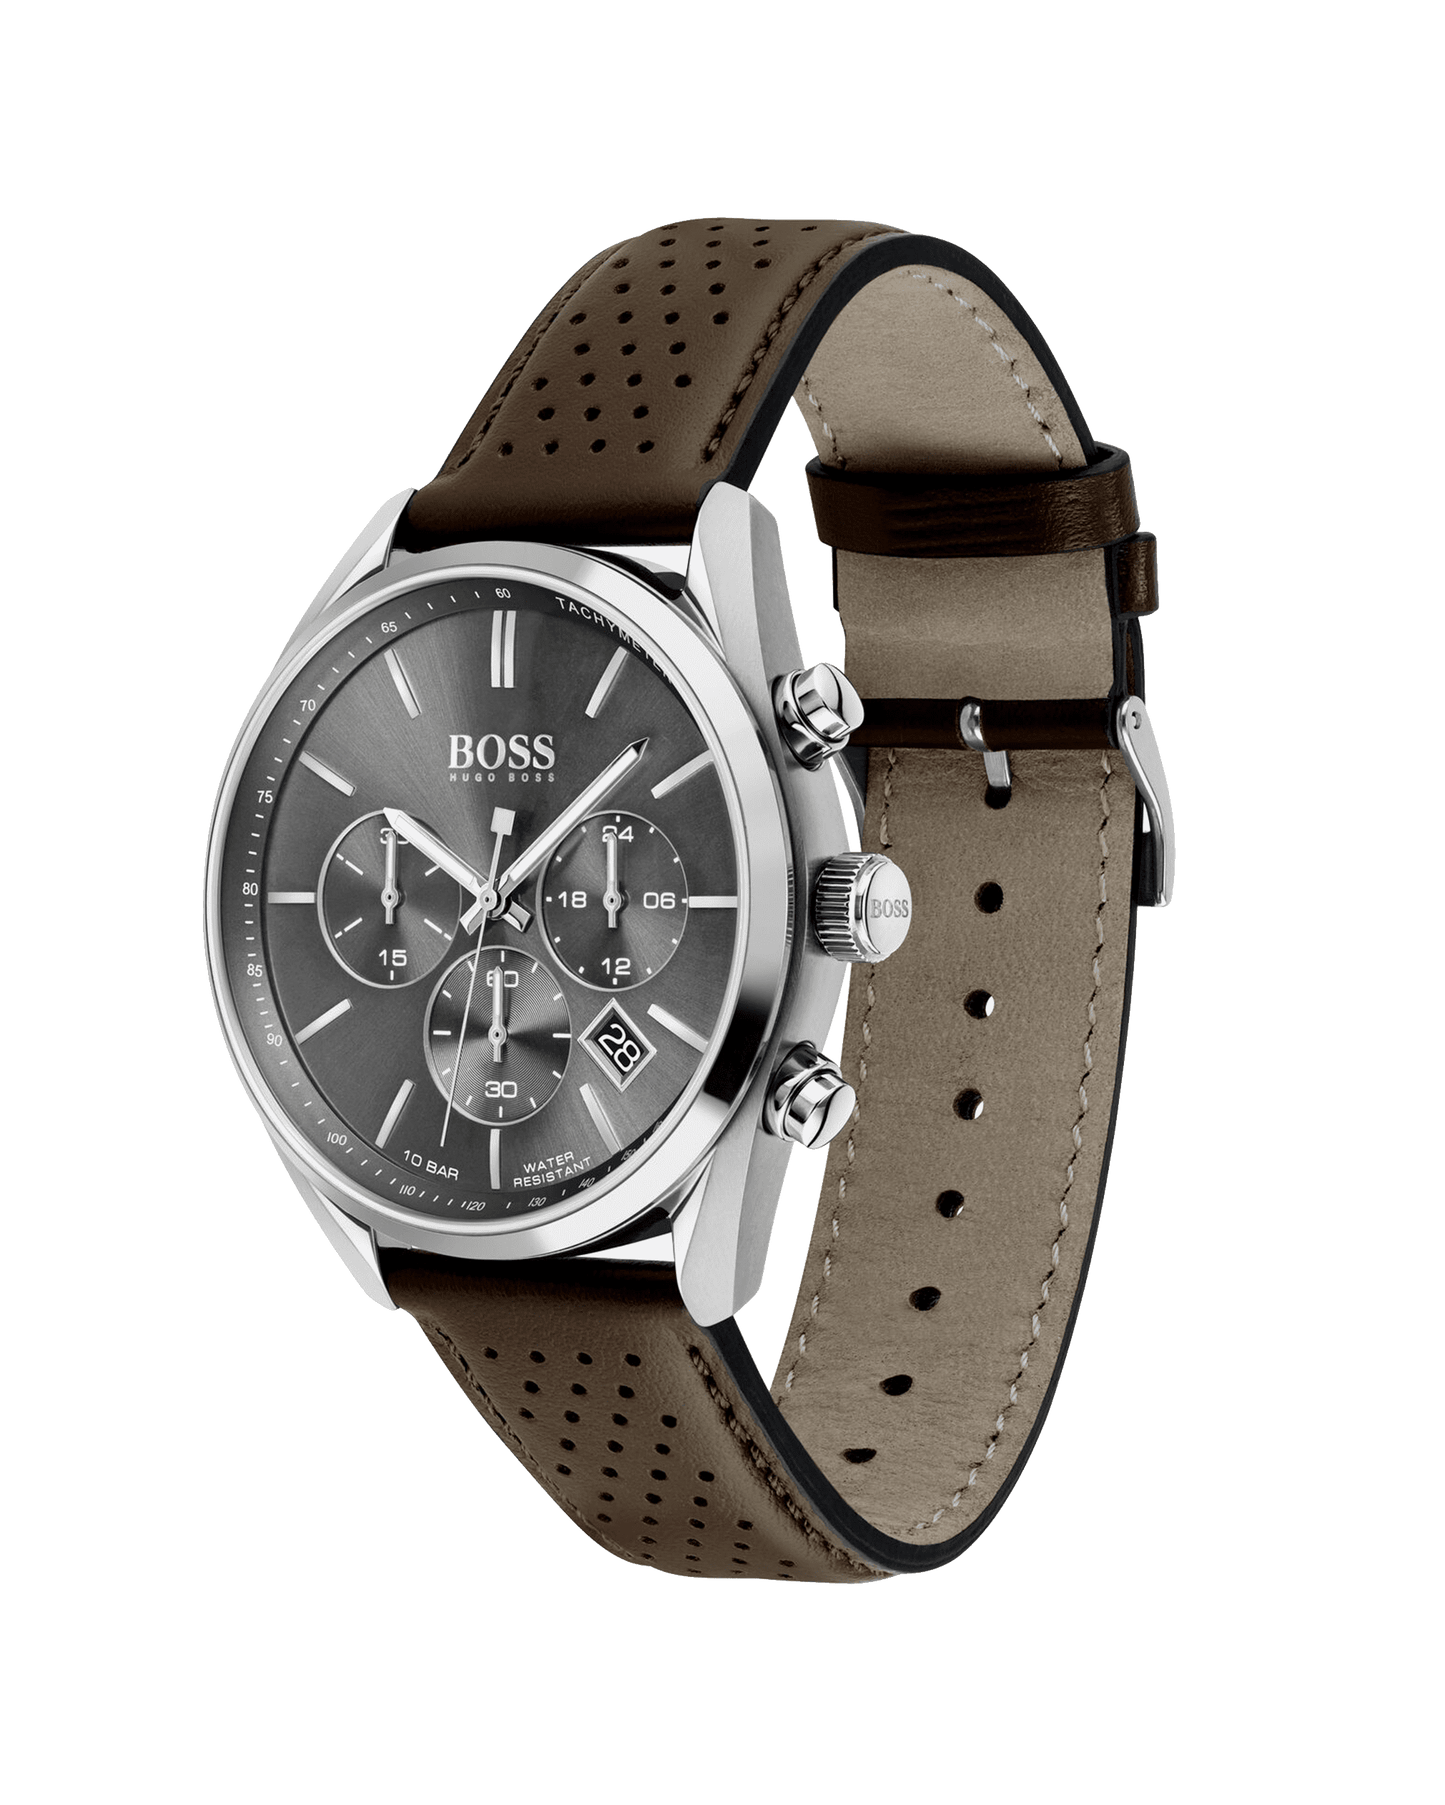 Hugo Boss: Distinctive Style Meets Precision Timekeeping